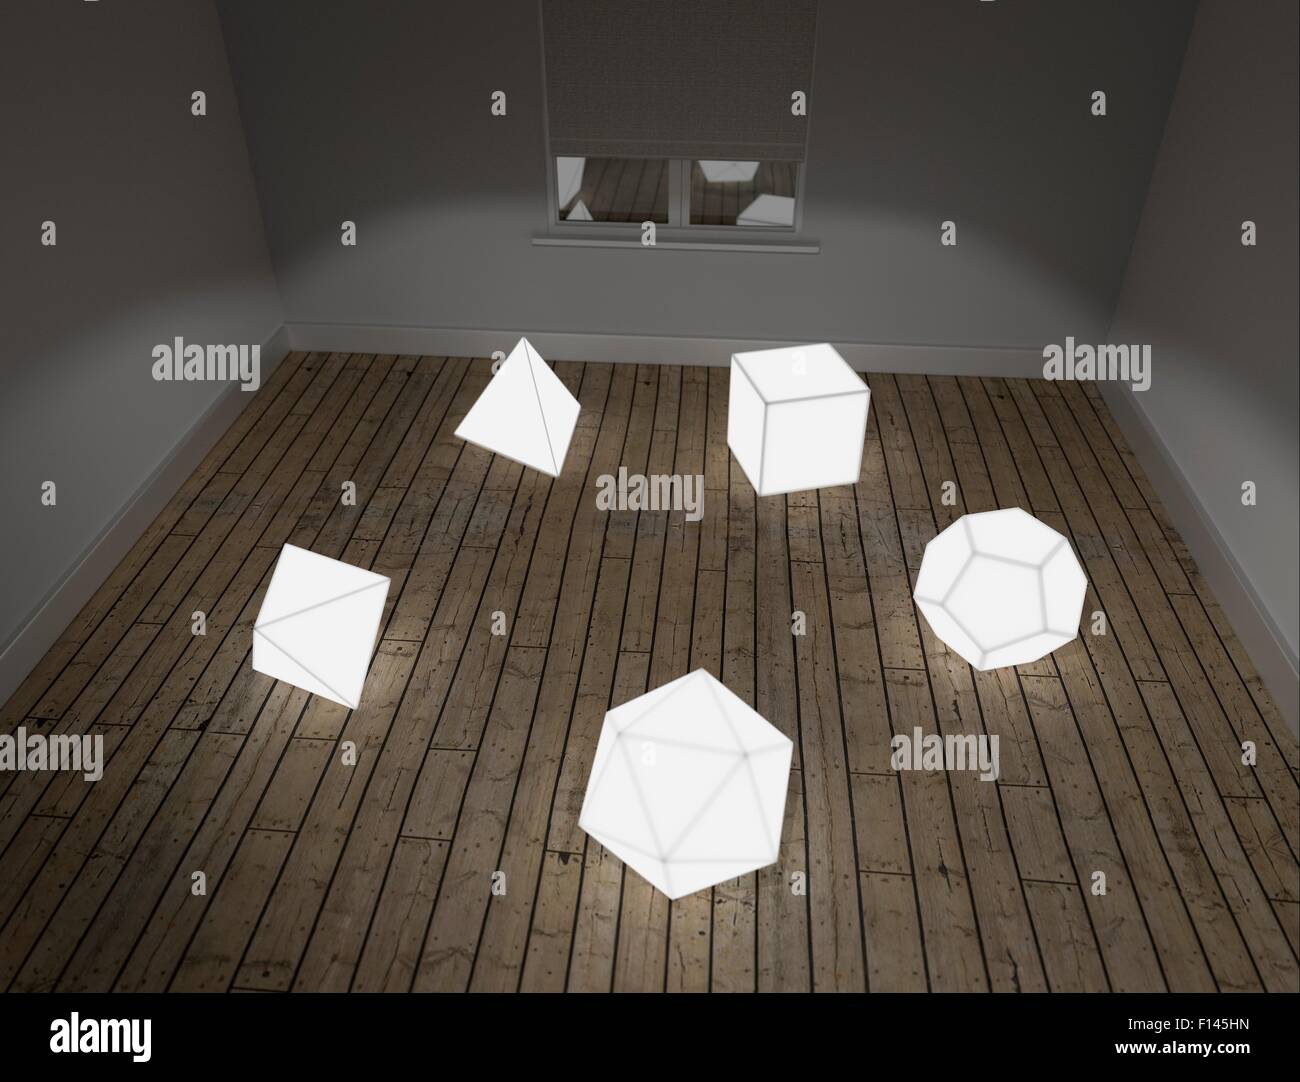 Illuminated models of the five Platonic solids on floor of room in studio Stock Photo